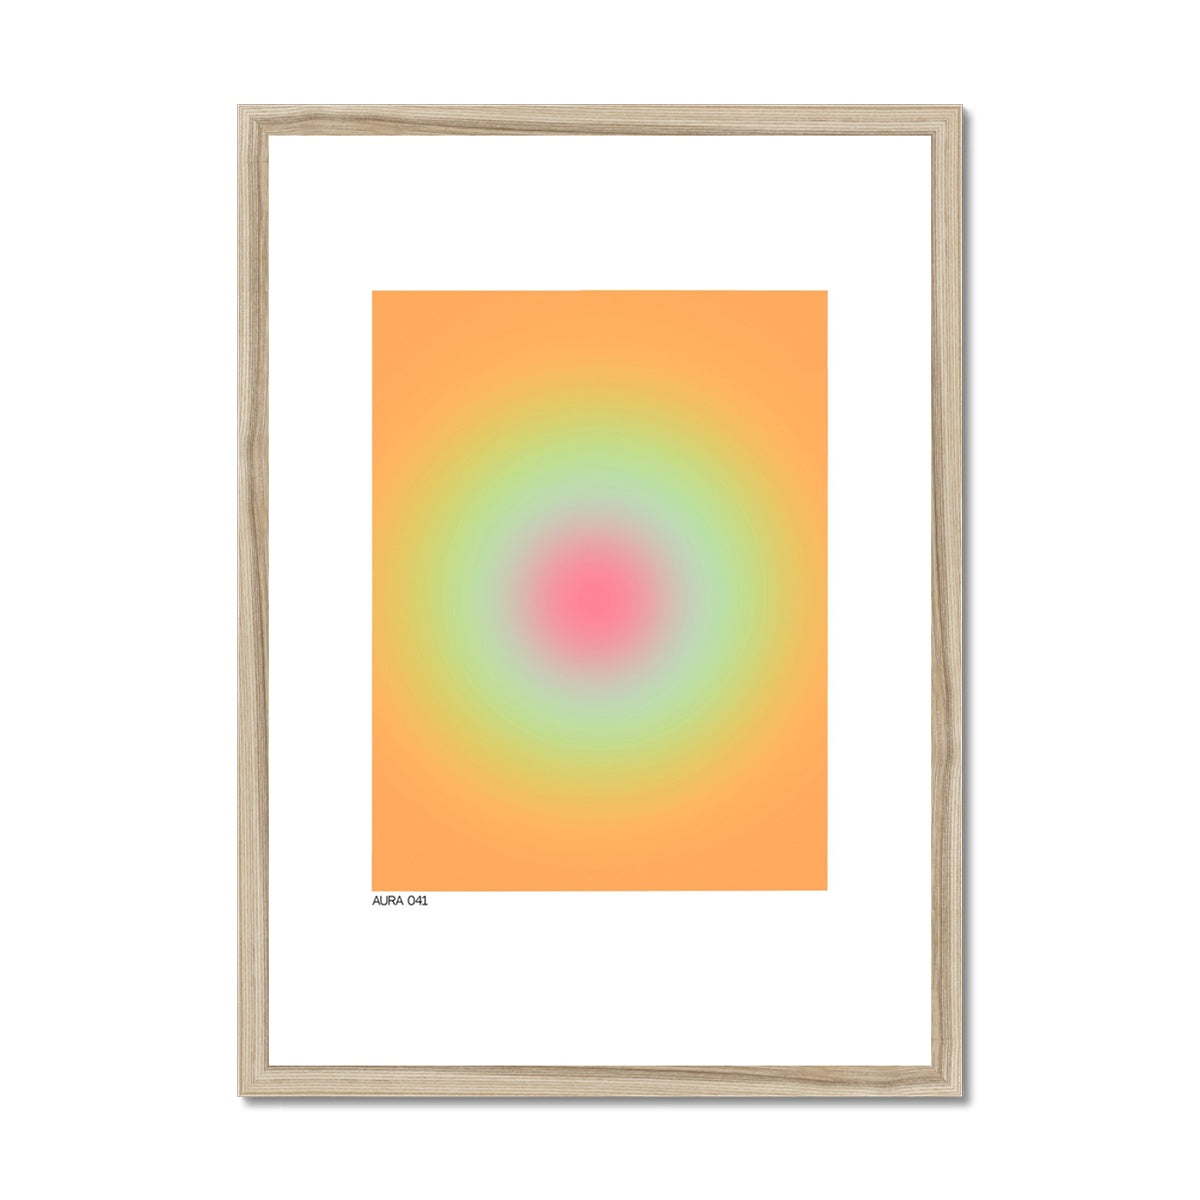 aura 041 Framed & Mounted Print